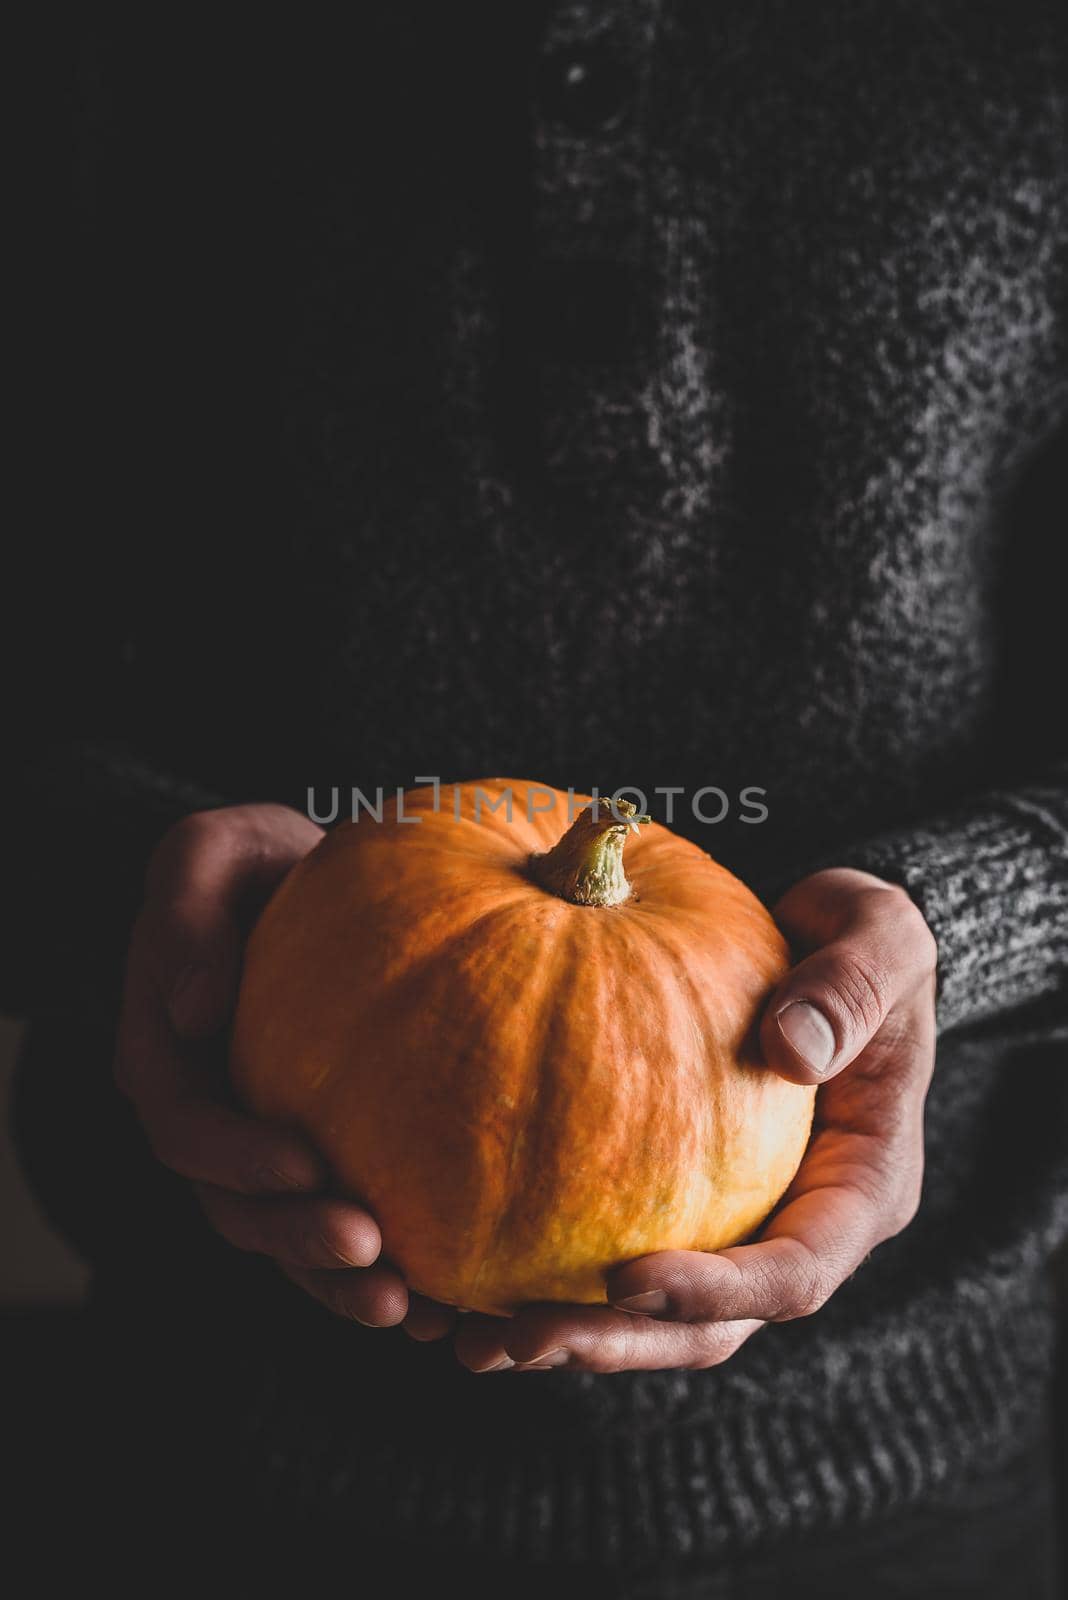 Man holding small pumpkin in hands by Seva_blsv